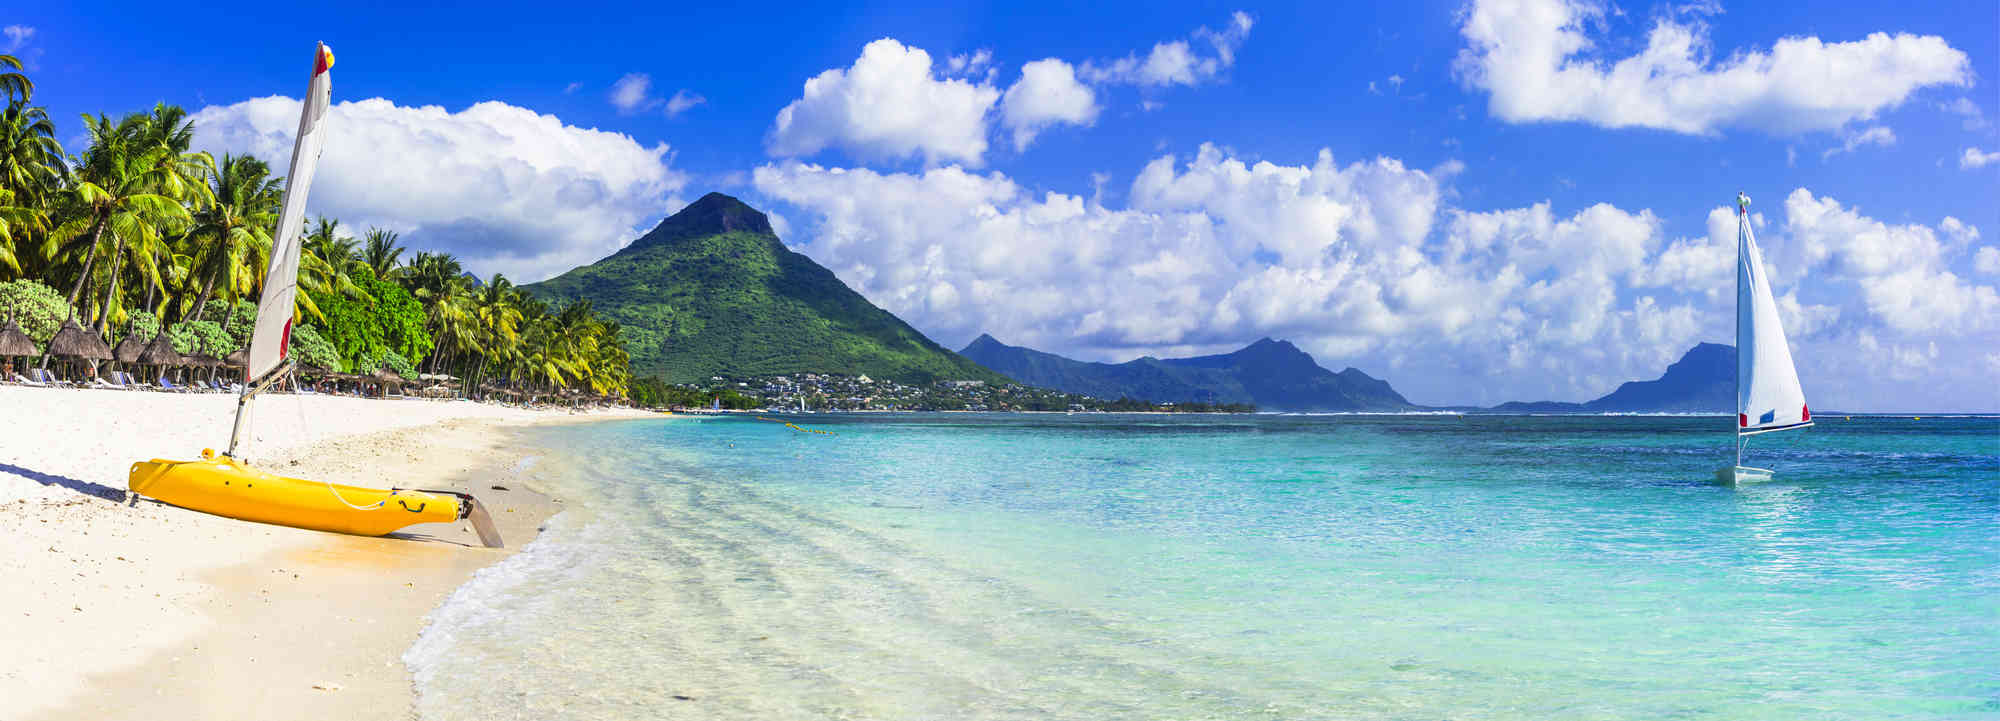 The beaches of Mauritius